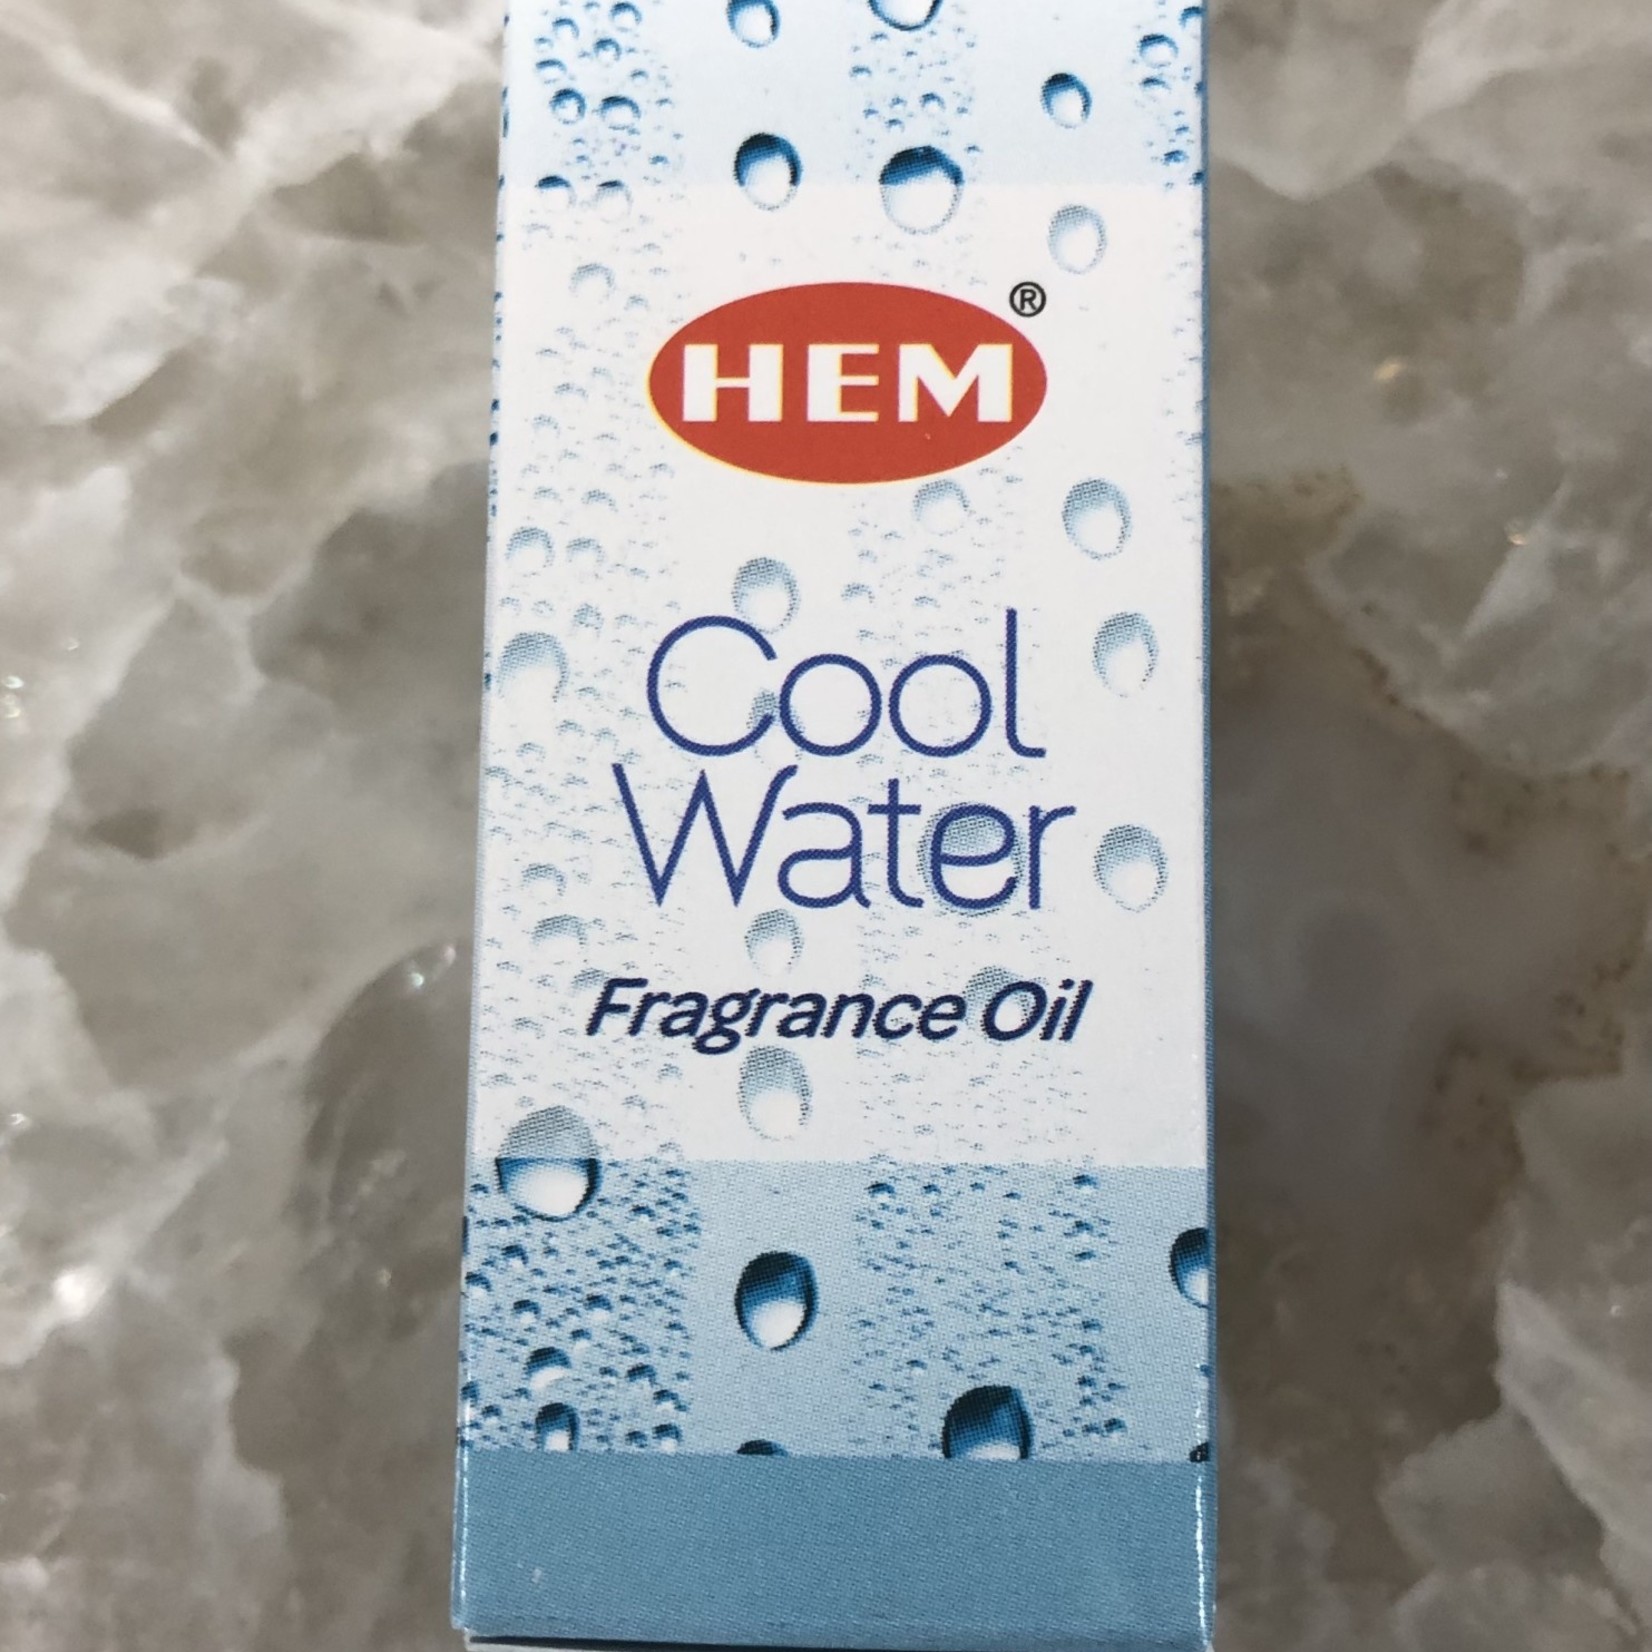 HEM Hem Aroma Oils - Cool Water